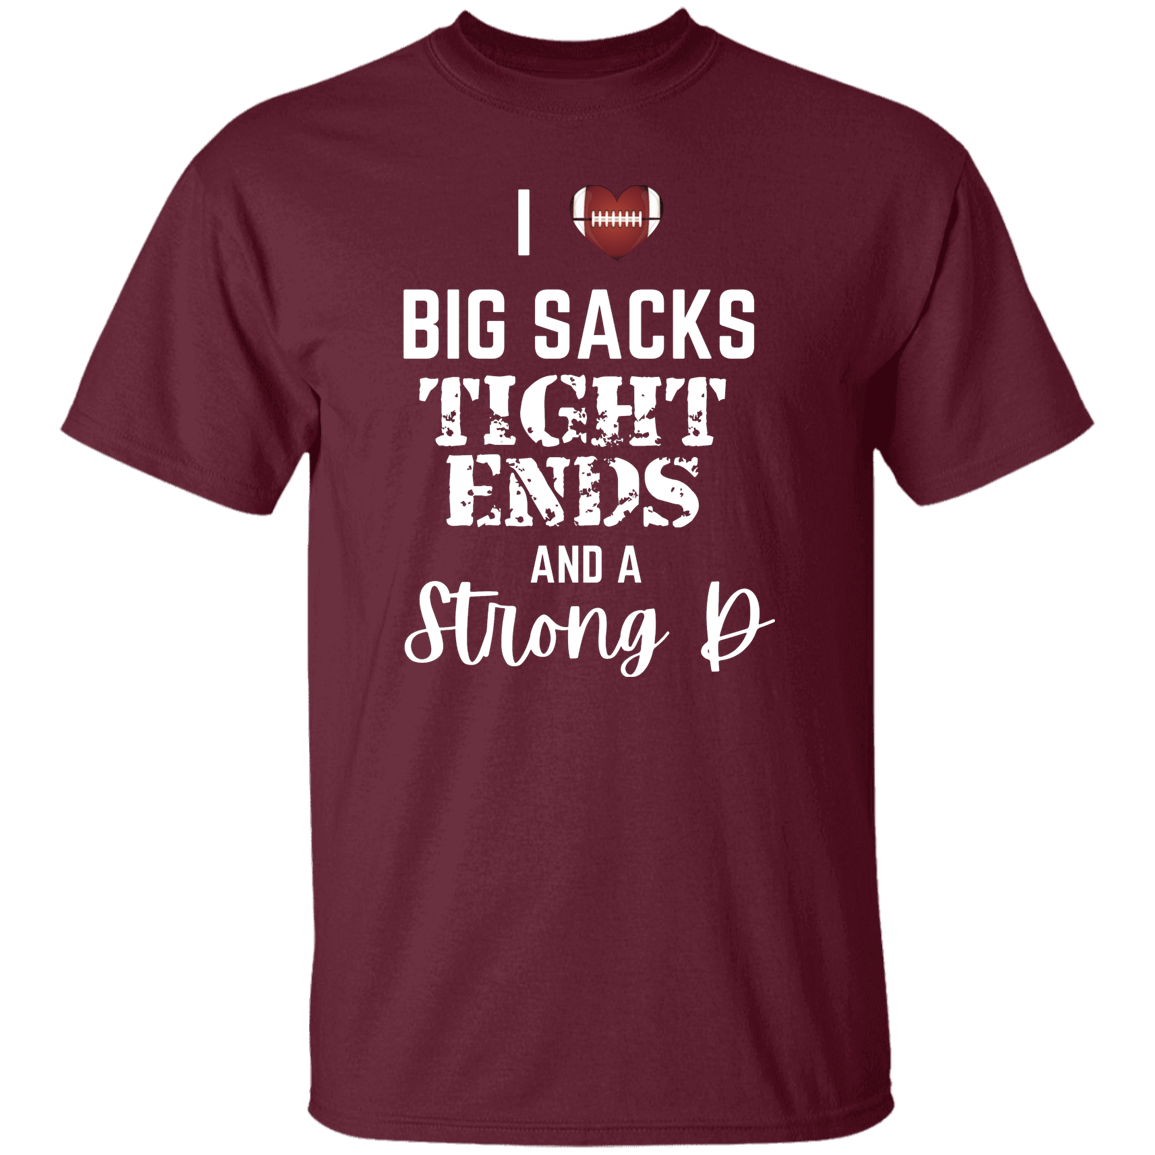 BIG SACKS 5.3 oz. T-Shirt